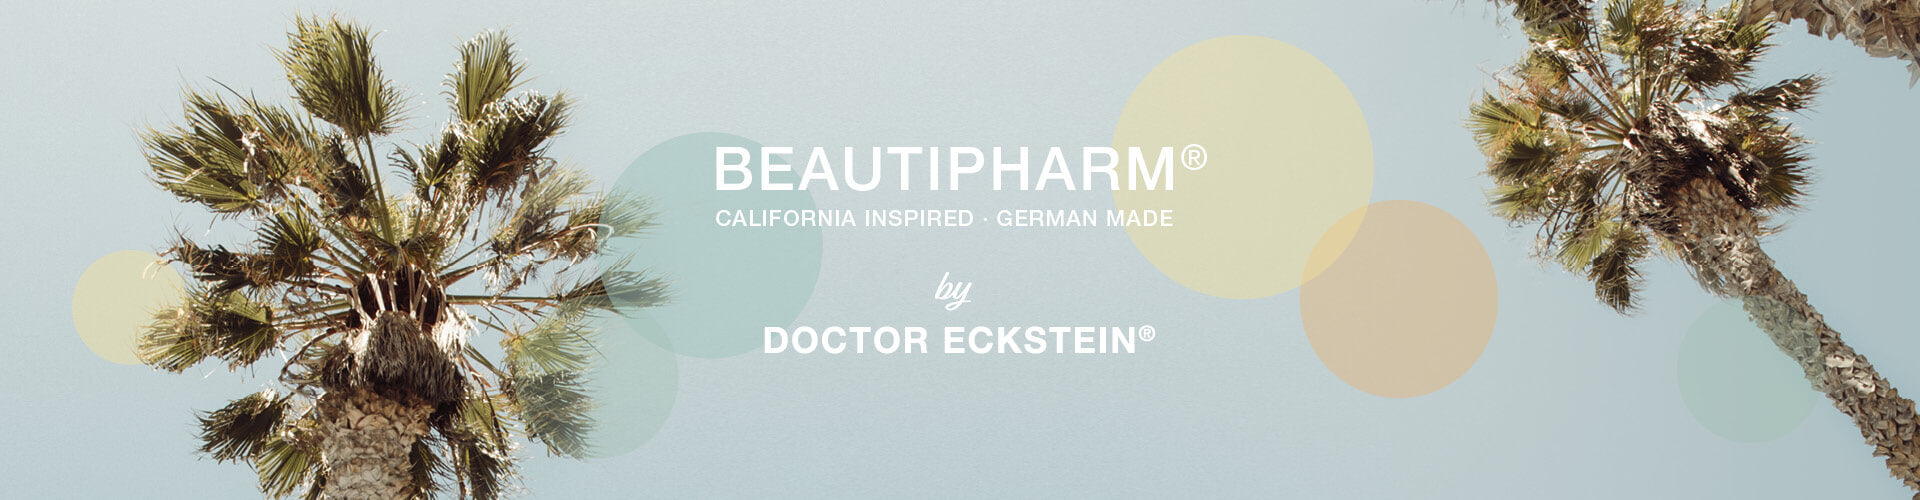 Beautipharm®: Feel the Endless Summer on Your Skin.